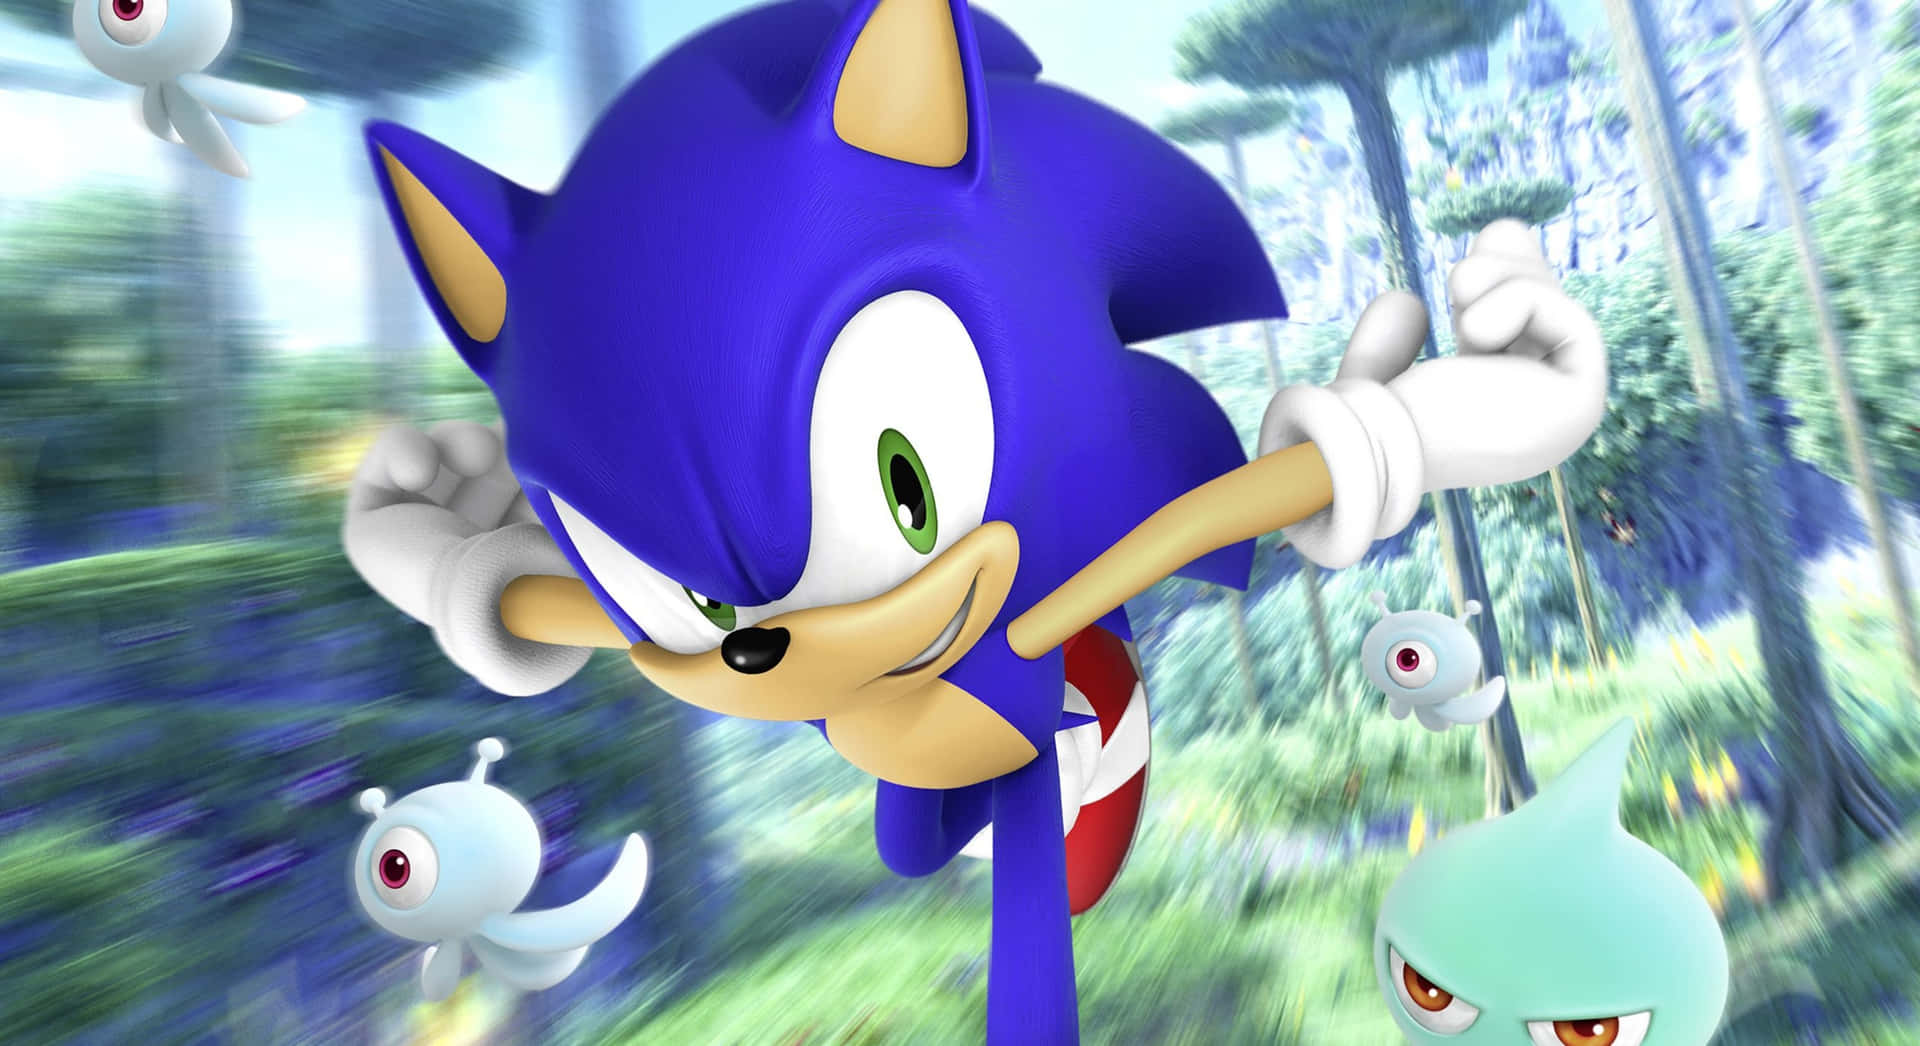 Fondosde Pantalla De Sonic The Hedgehog